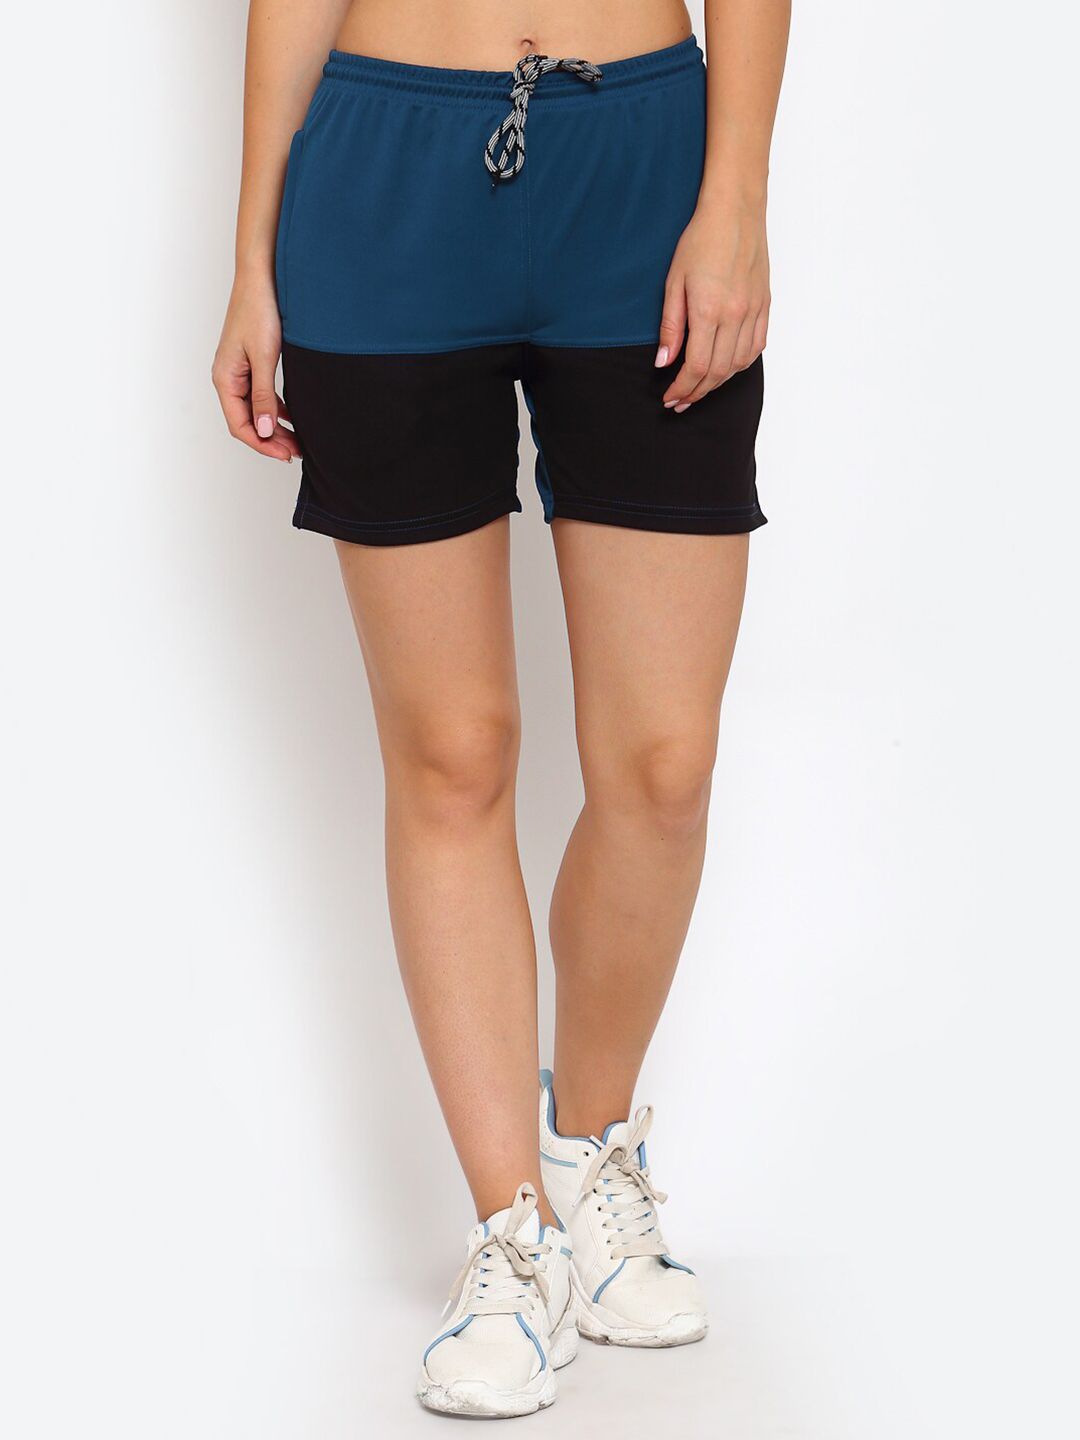 KLOTTHE Women Blue & Black Colourblocked Sports Shorts Price in India